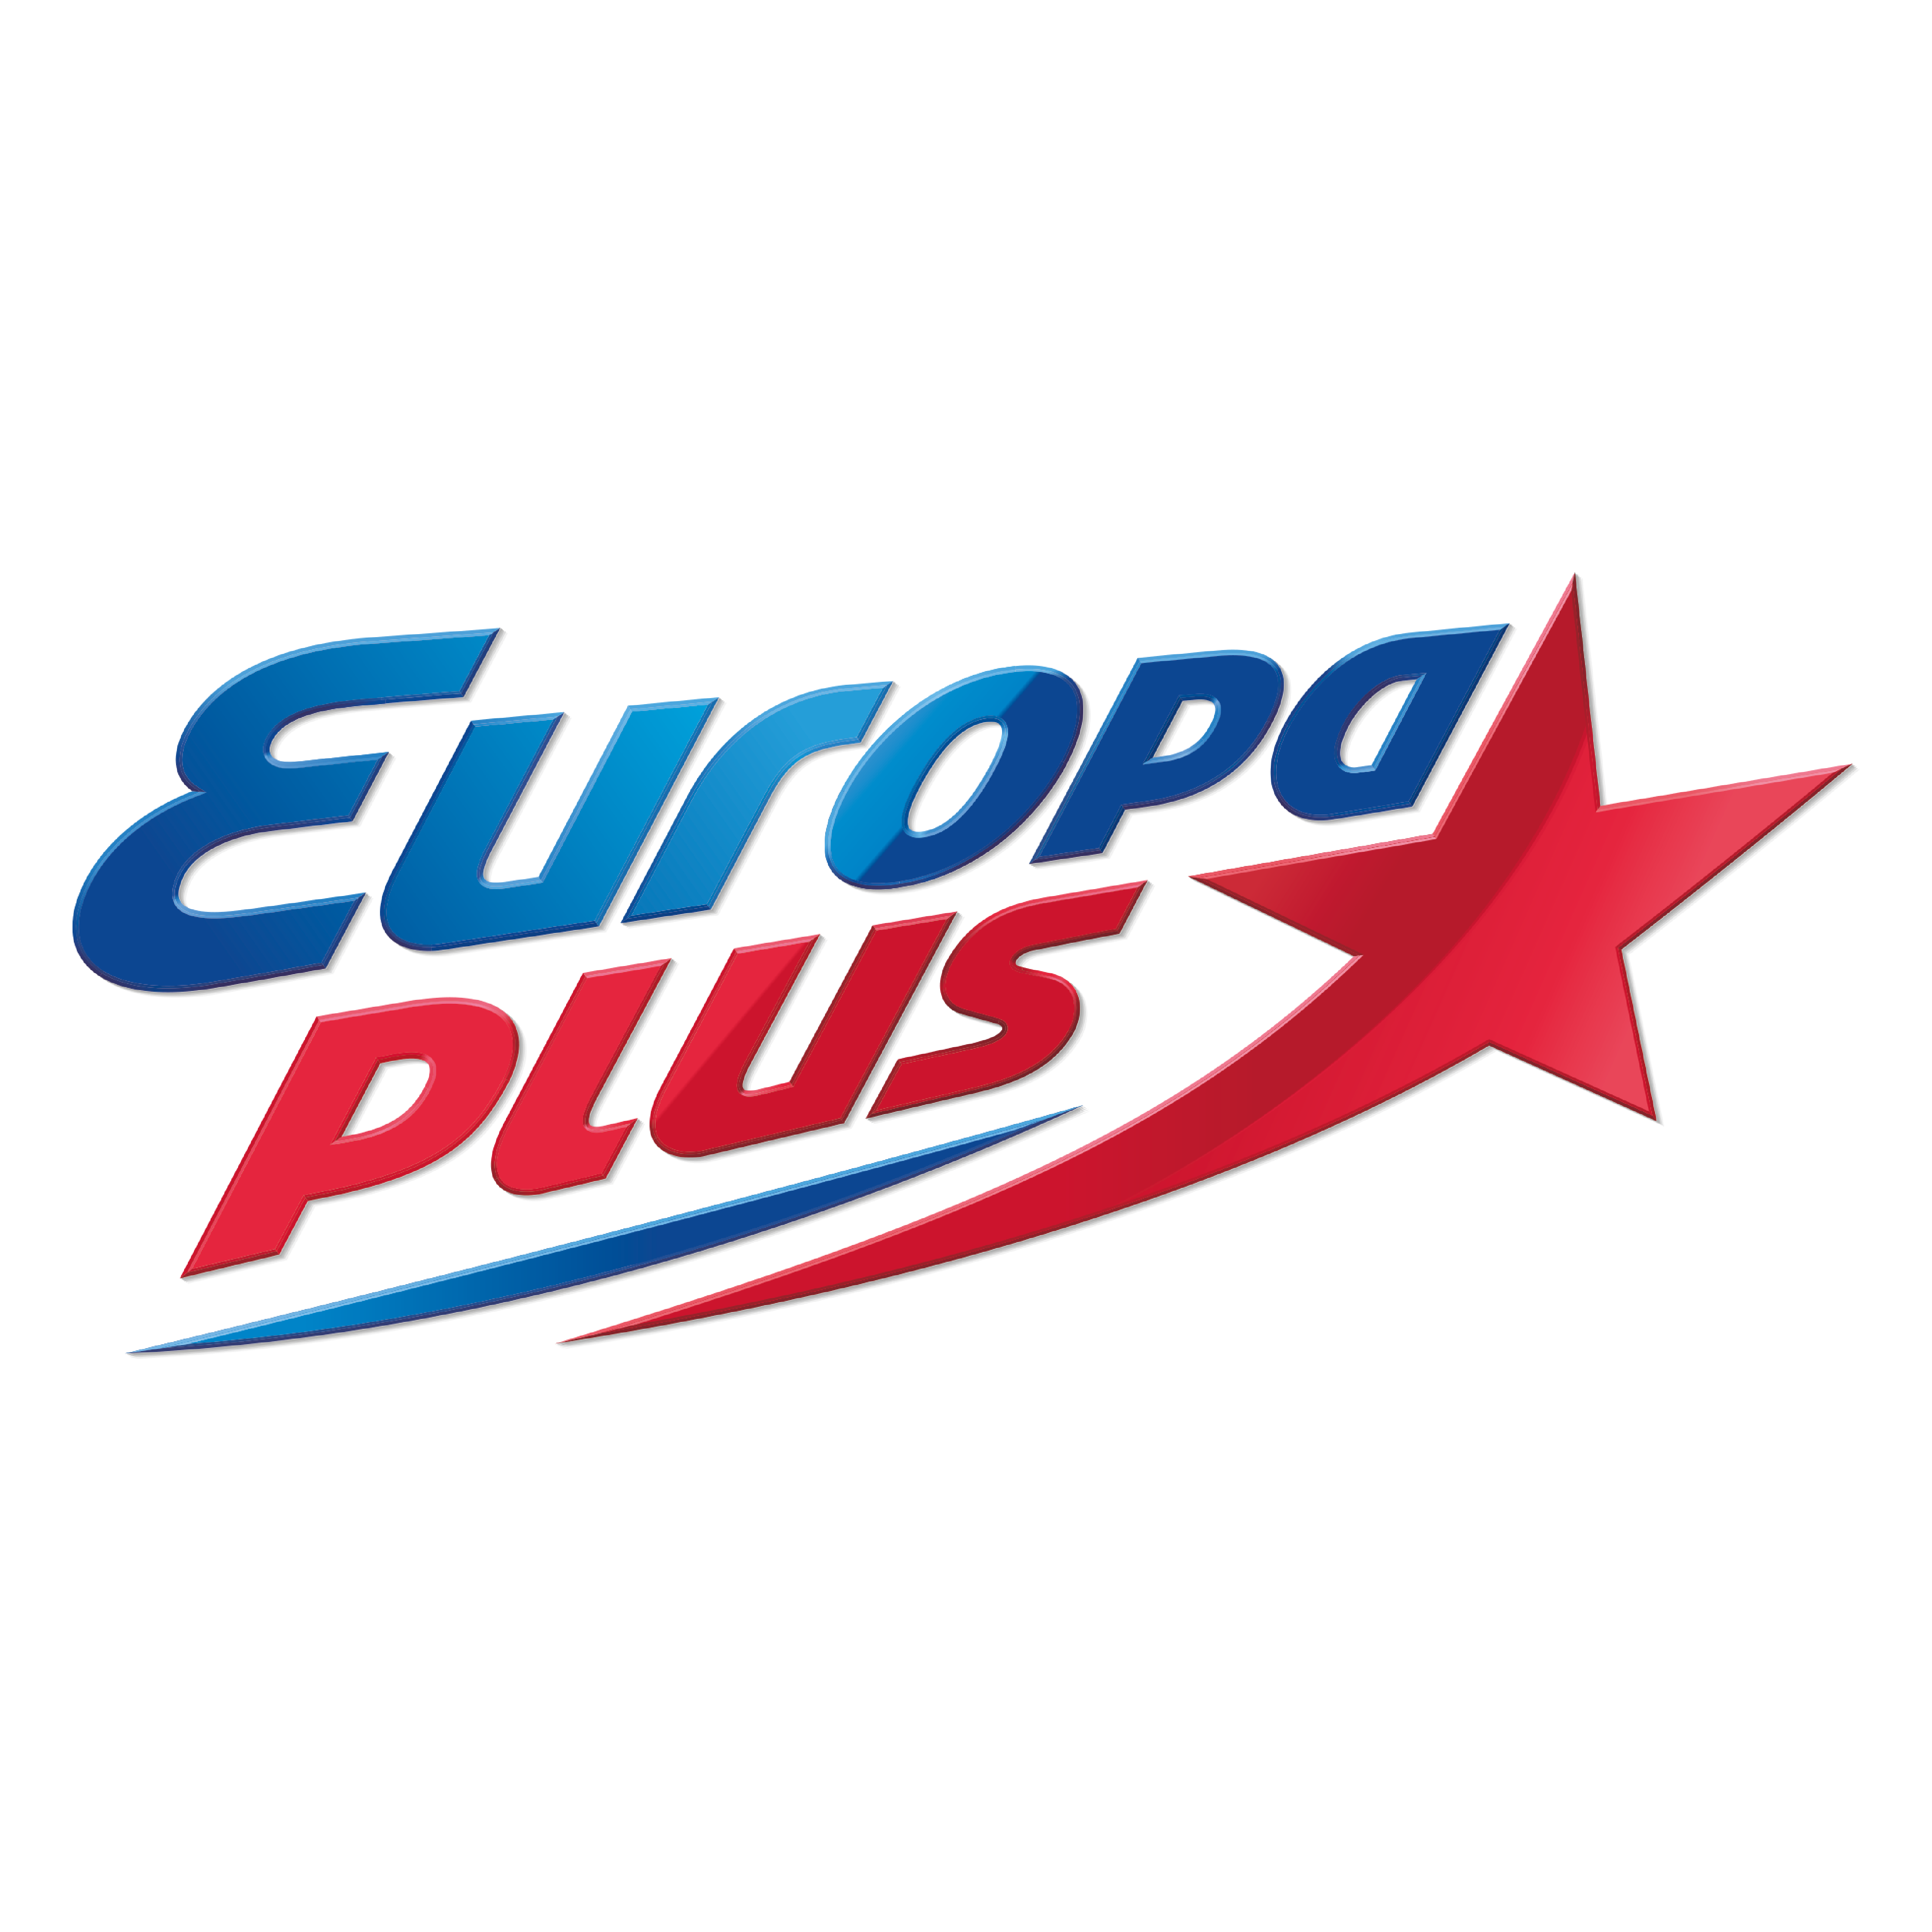 Чарты радио европа. Европа плюс 106.2 fm Москва. Европа плюс логотип. Лого радиостанции Европа плюс. Европа плюс Сургут.